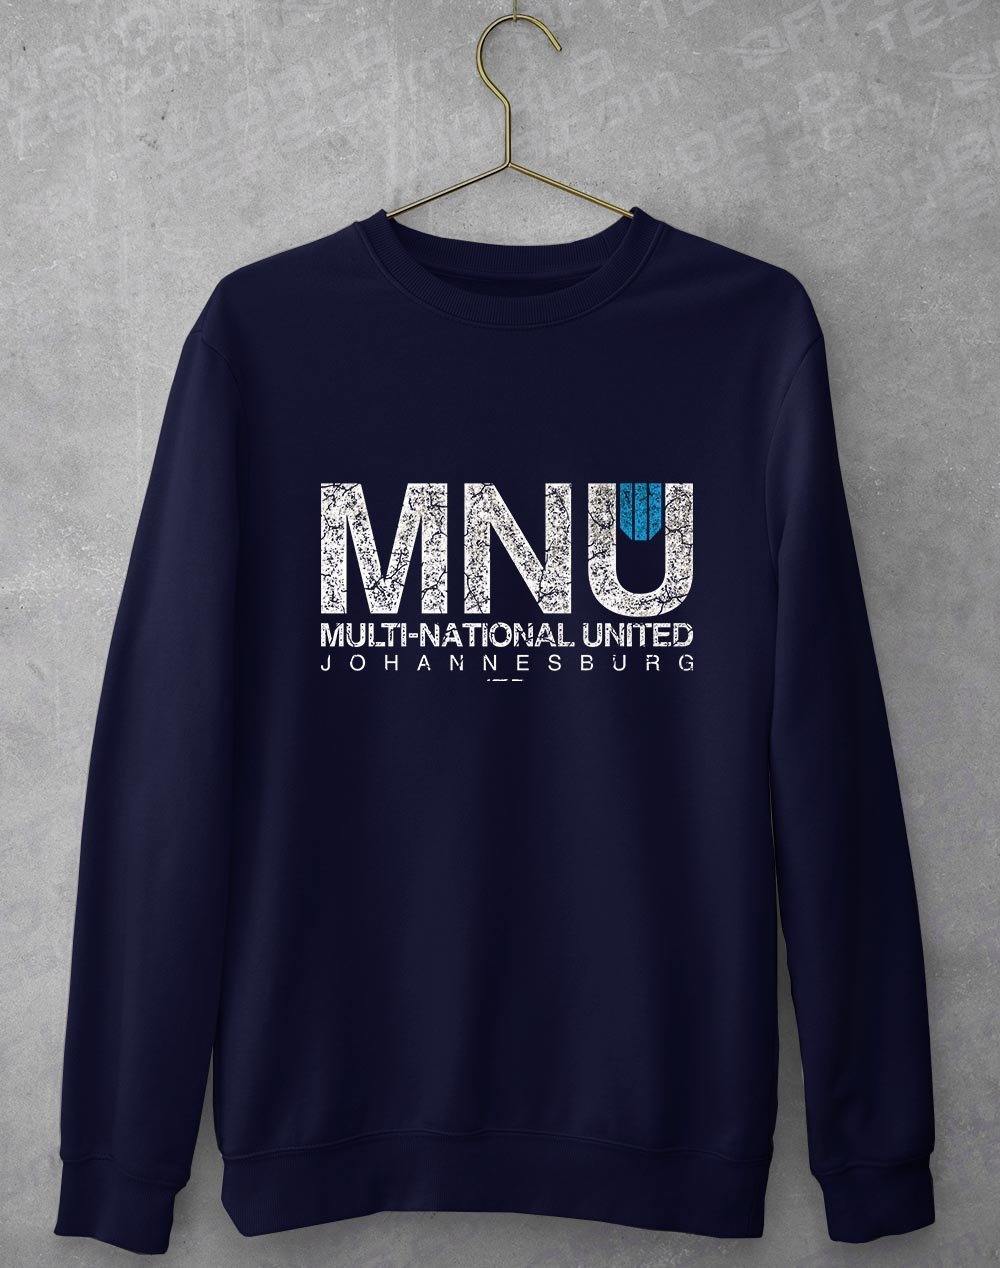 Multi National United Sweatshirt S / Navy  - Off World Tees